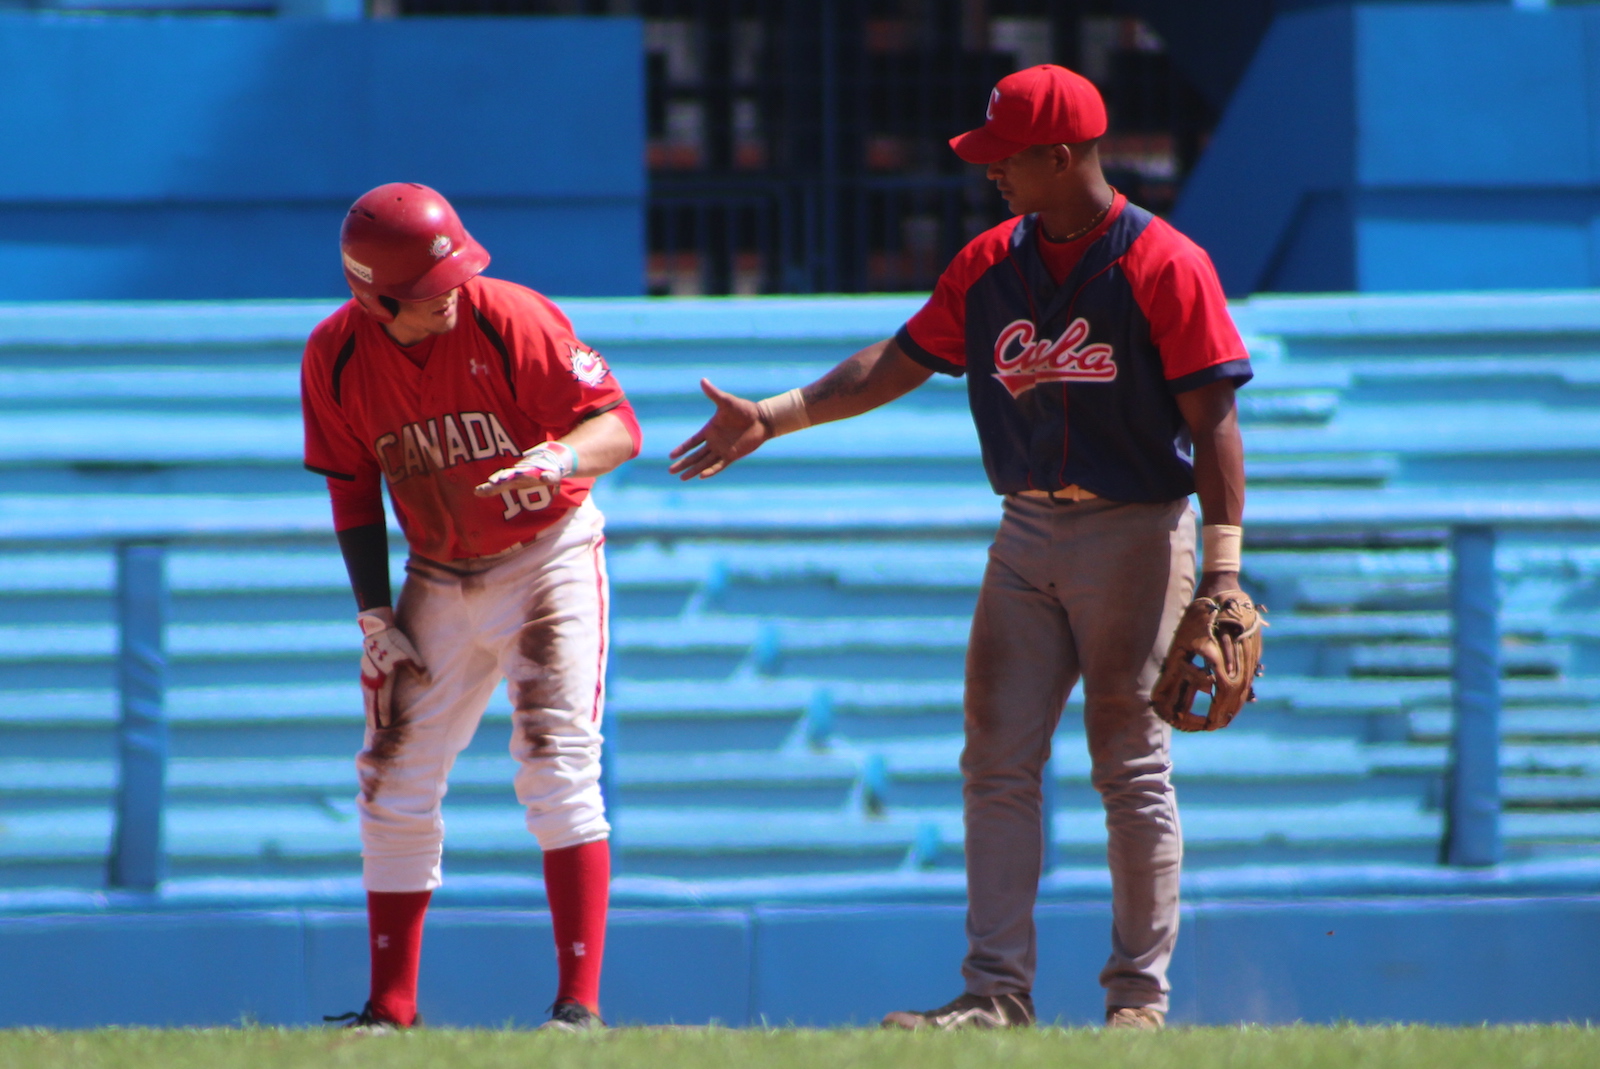 Cuba Summer Series: Big inning leads Cuba over Canada